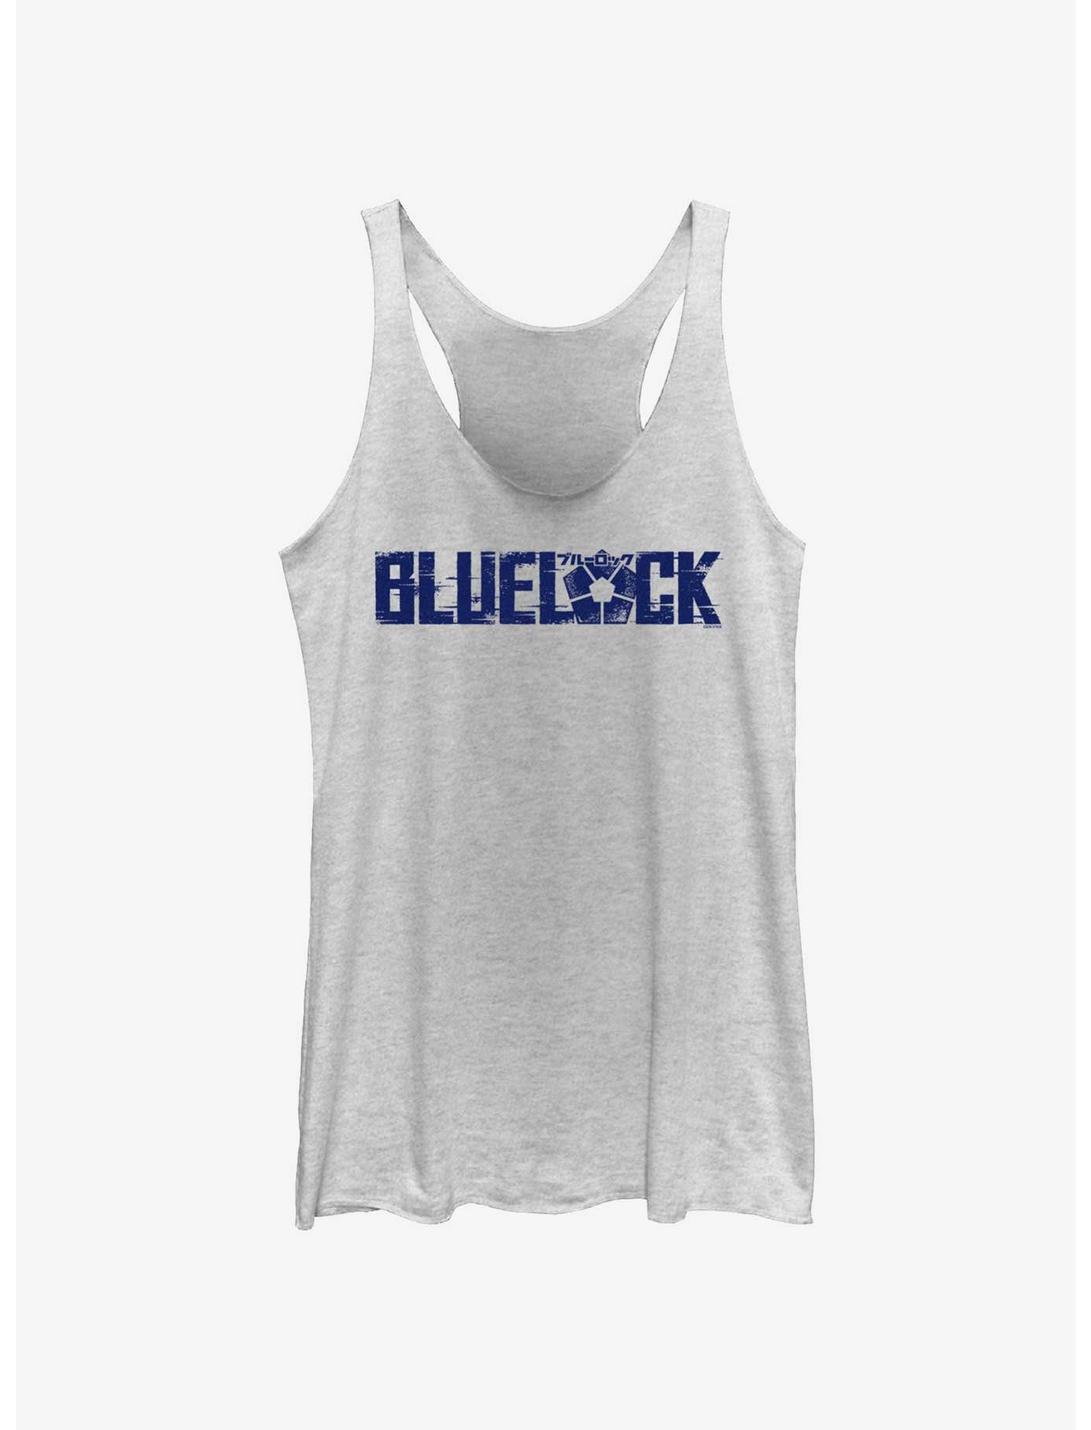 Blue Lock Glitch Logo Girls Tank, WHITE HTR, hi-res